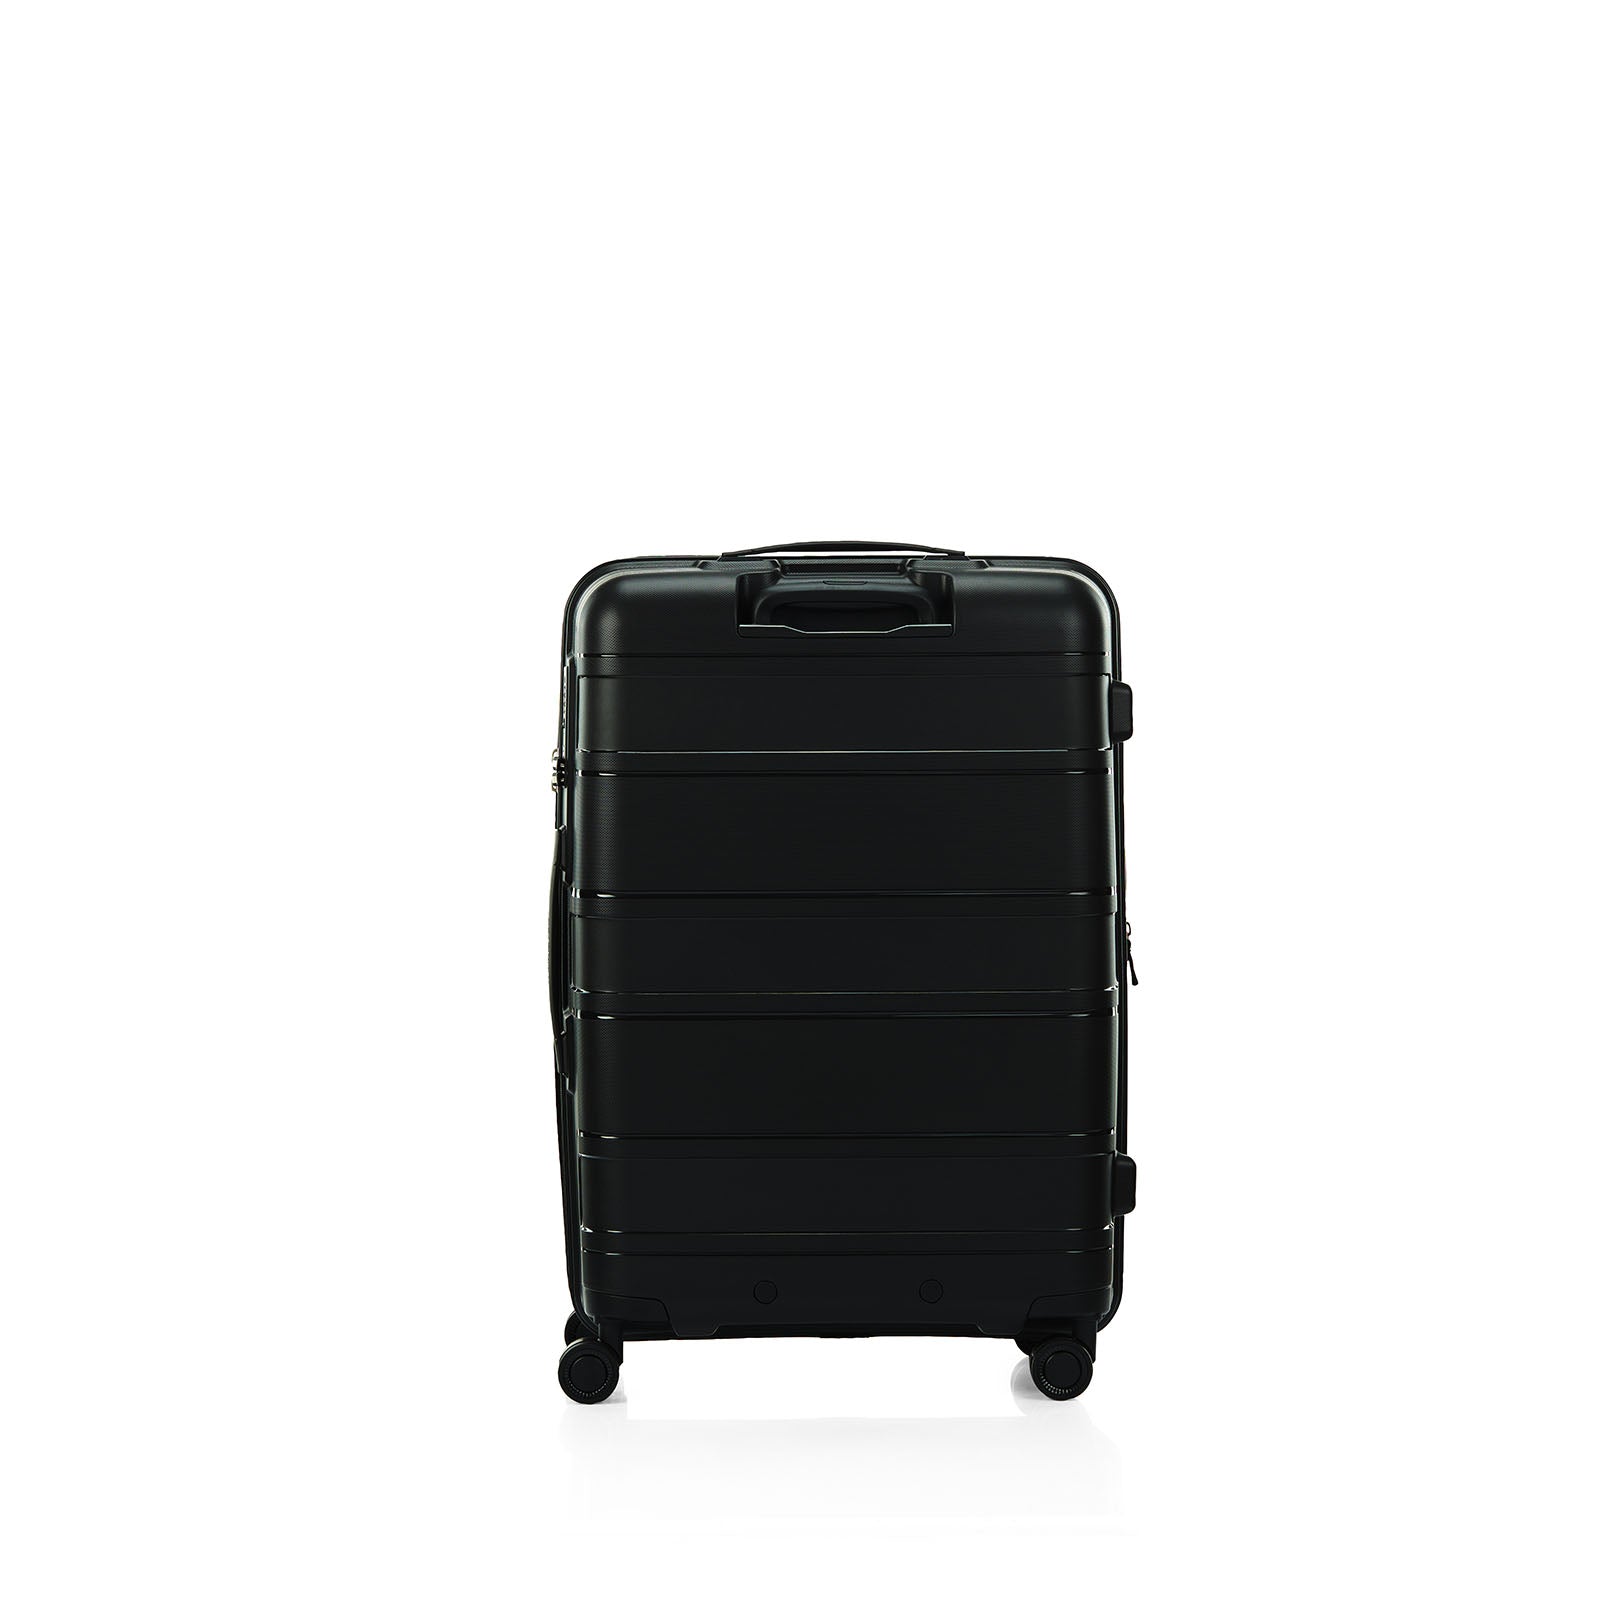 American-Tourister-Light-Max-69cm-Suitcase-Black-Back